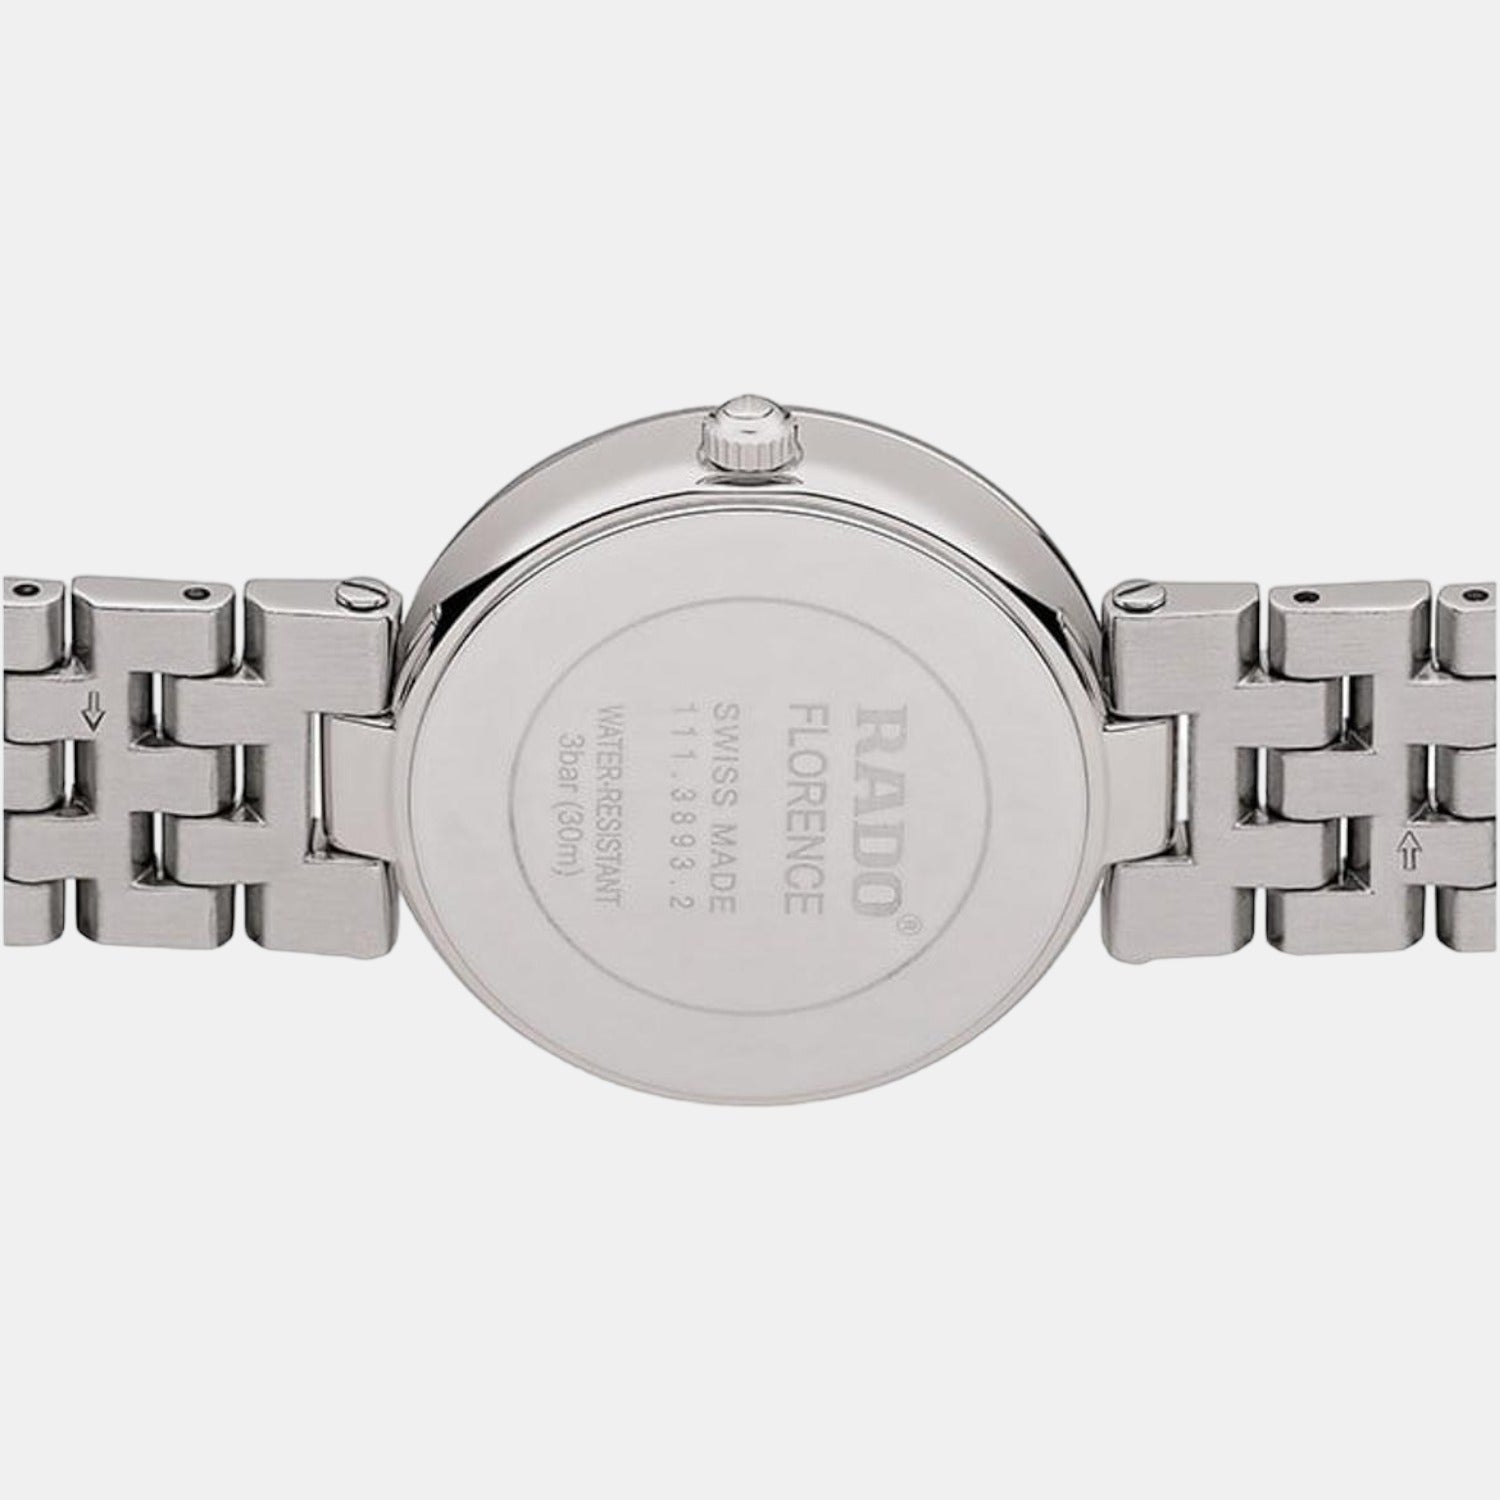 rado-stainless-steel-black-analog-female-watch-r48908713